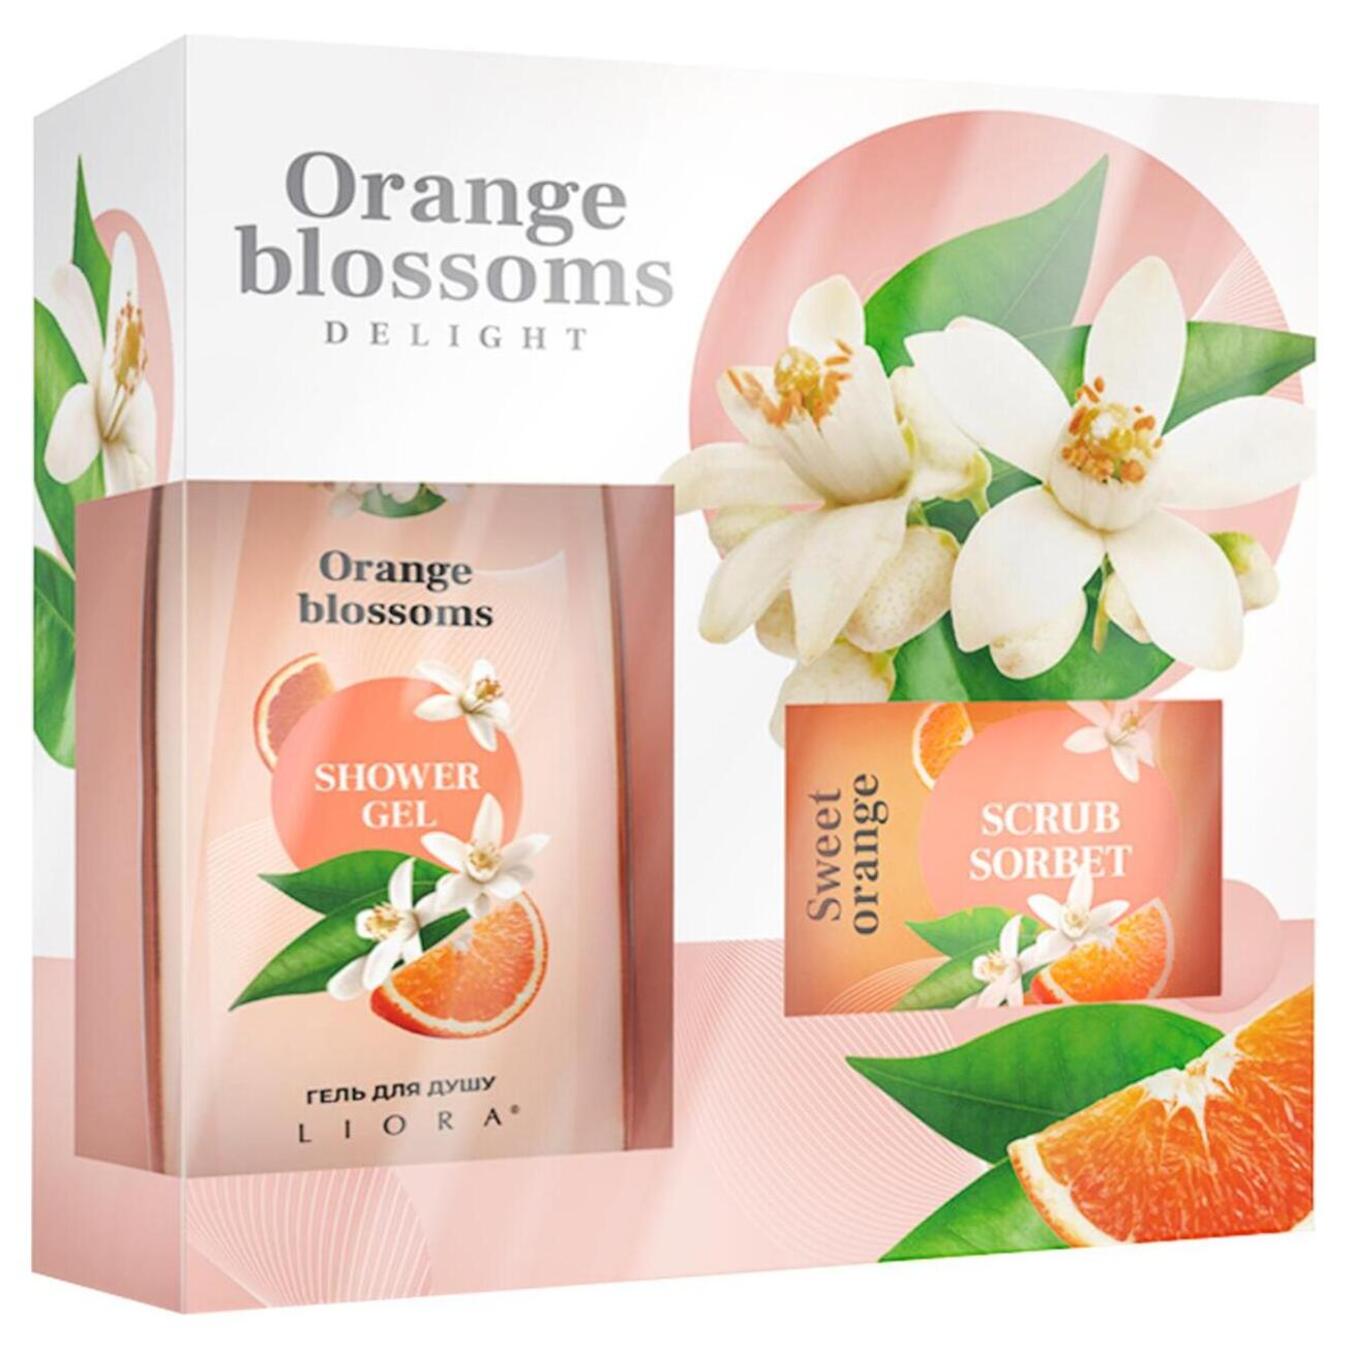 Liora Orange blossoms cosmetic set (Orange blossoms shower gel 150ml + Sweet orange sorbet body scrub 150ml)